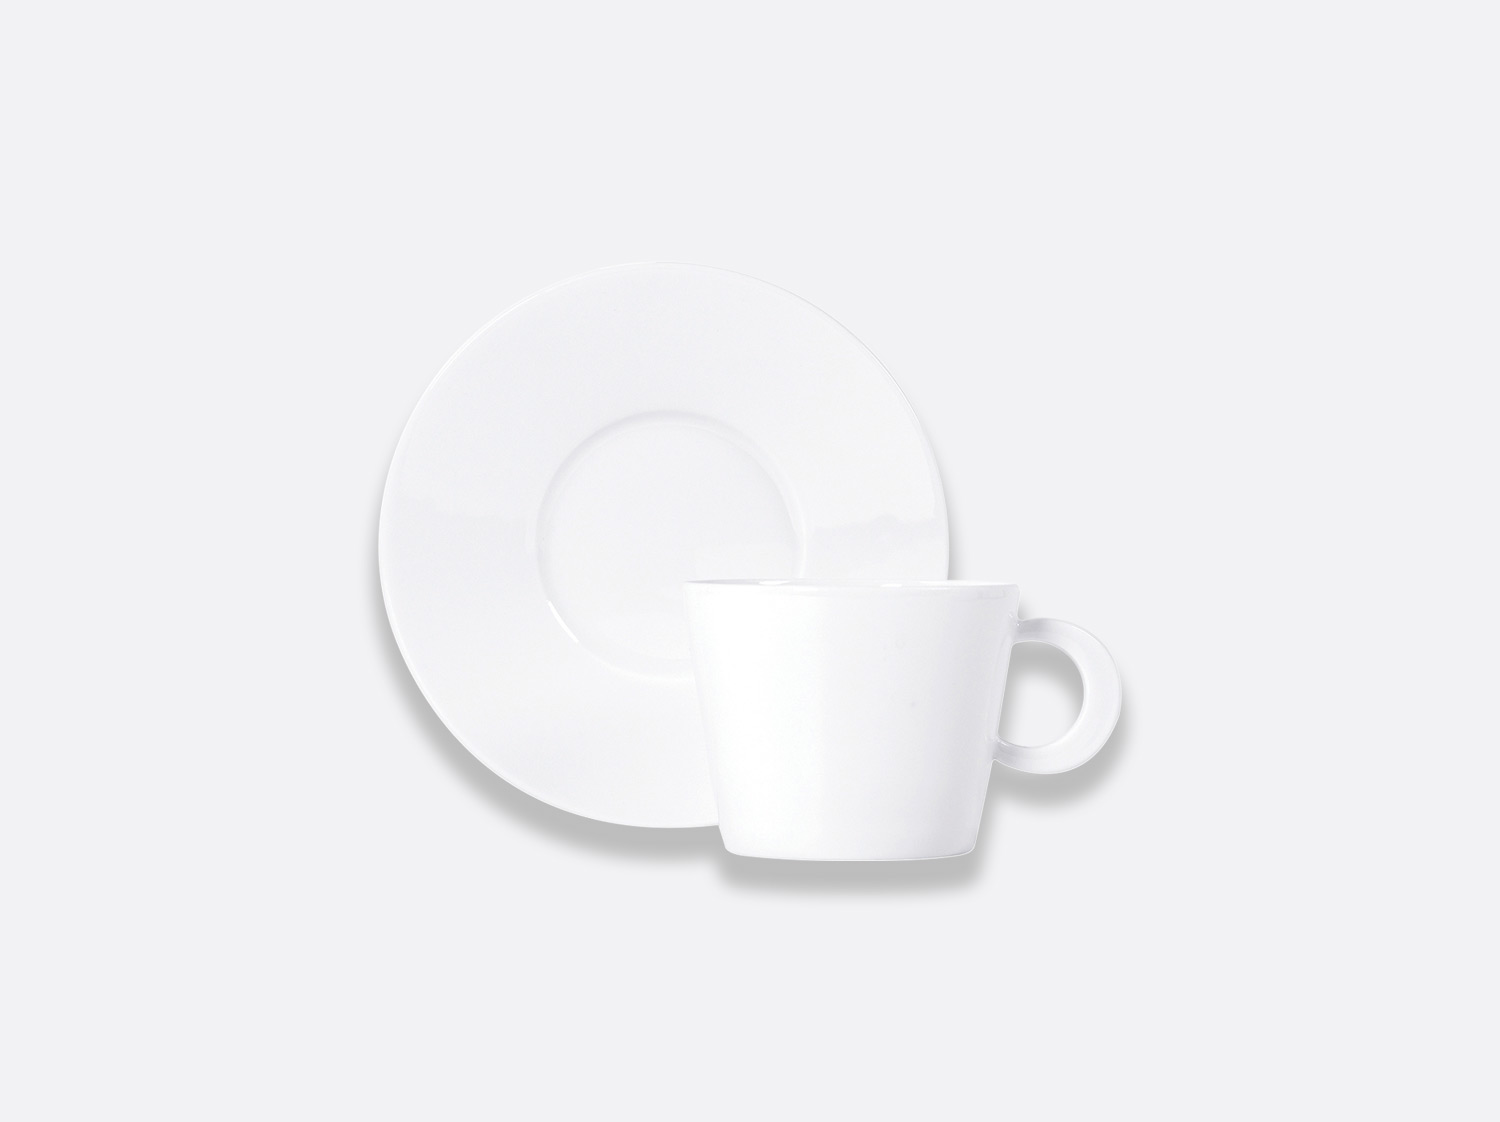 China Opus teacup and saucer 5.7 oz of the collection Fantaisies blanches | Bernardaud